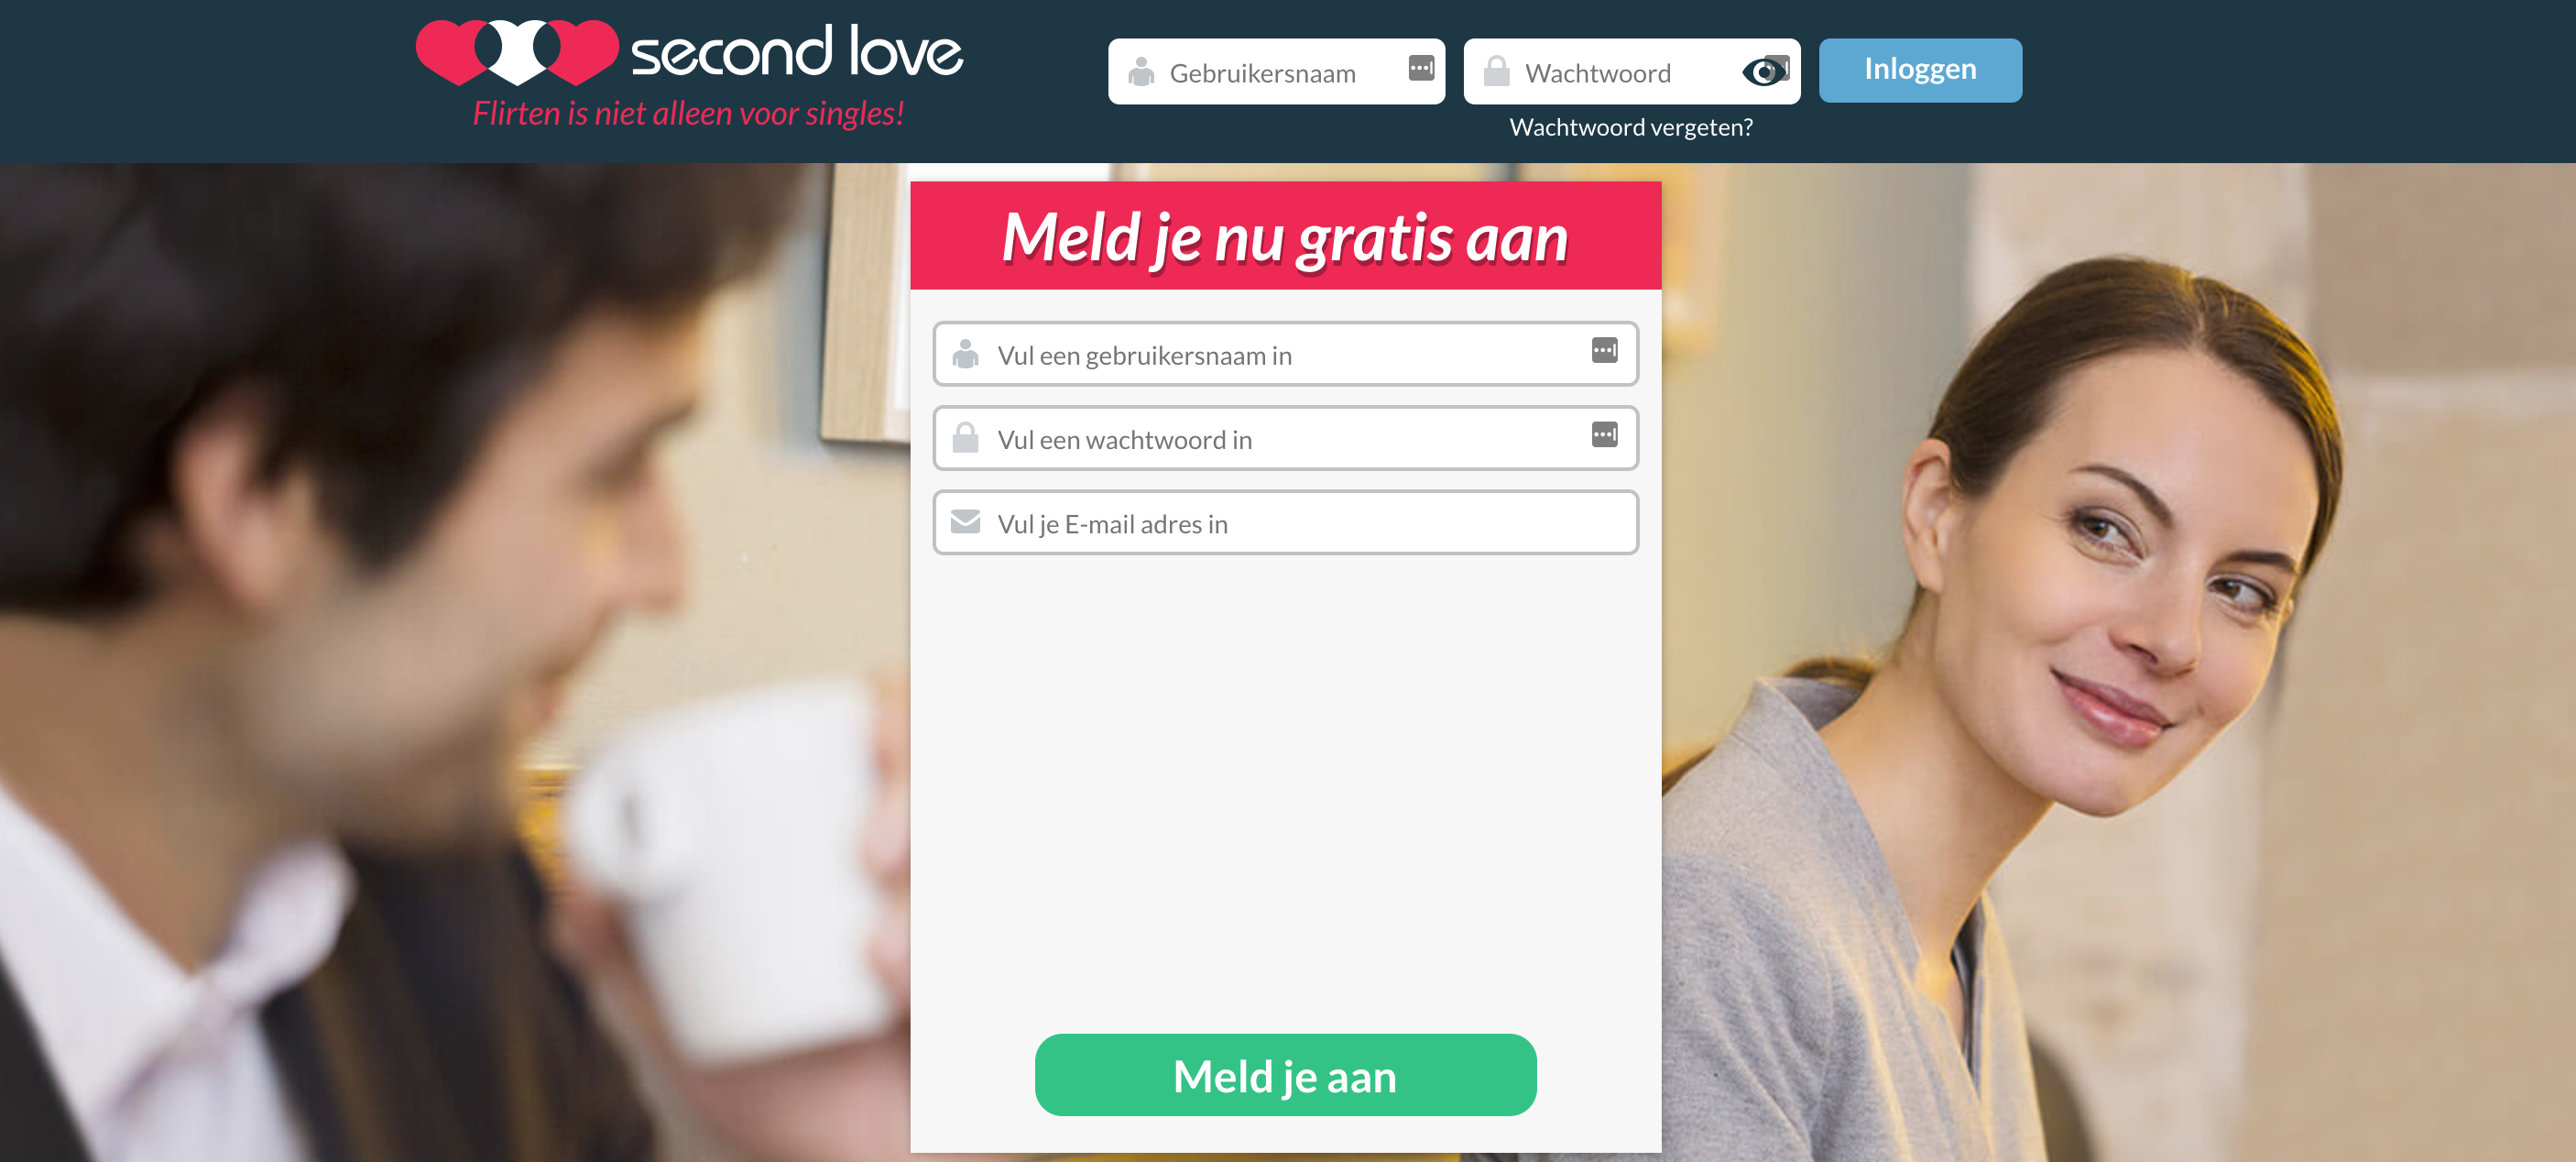 Second Love website